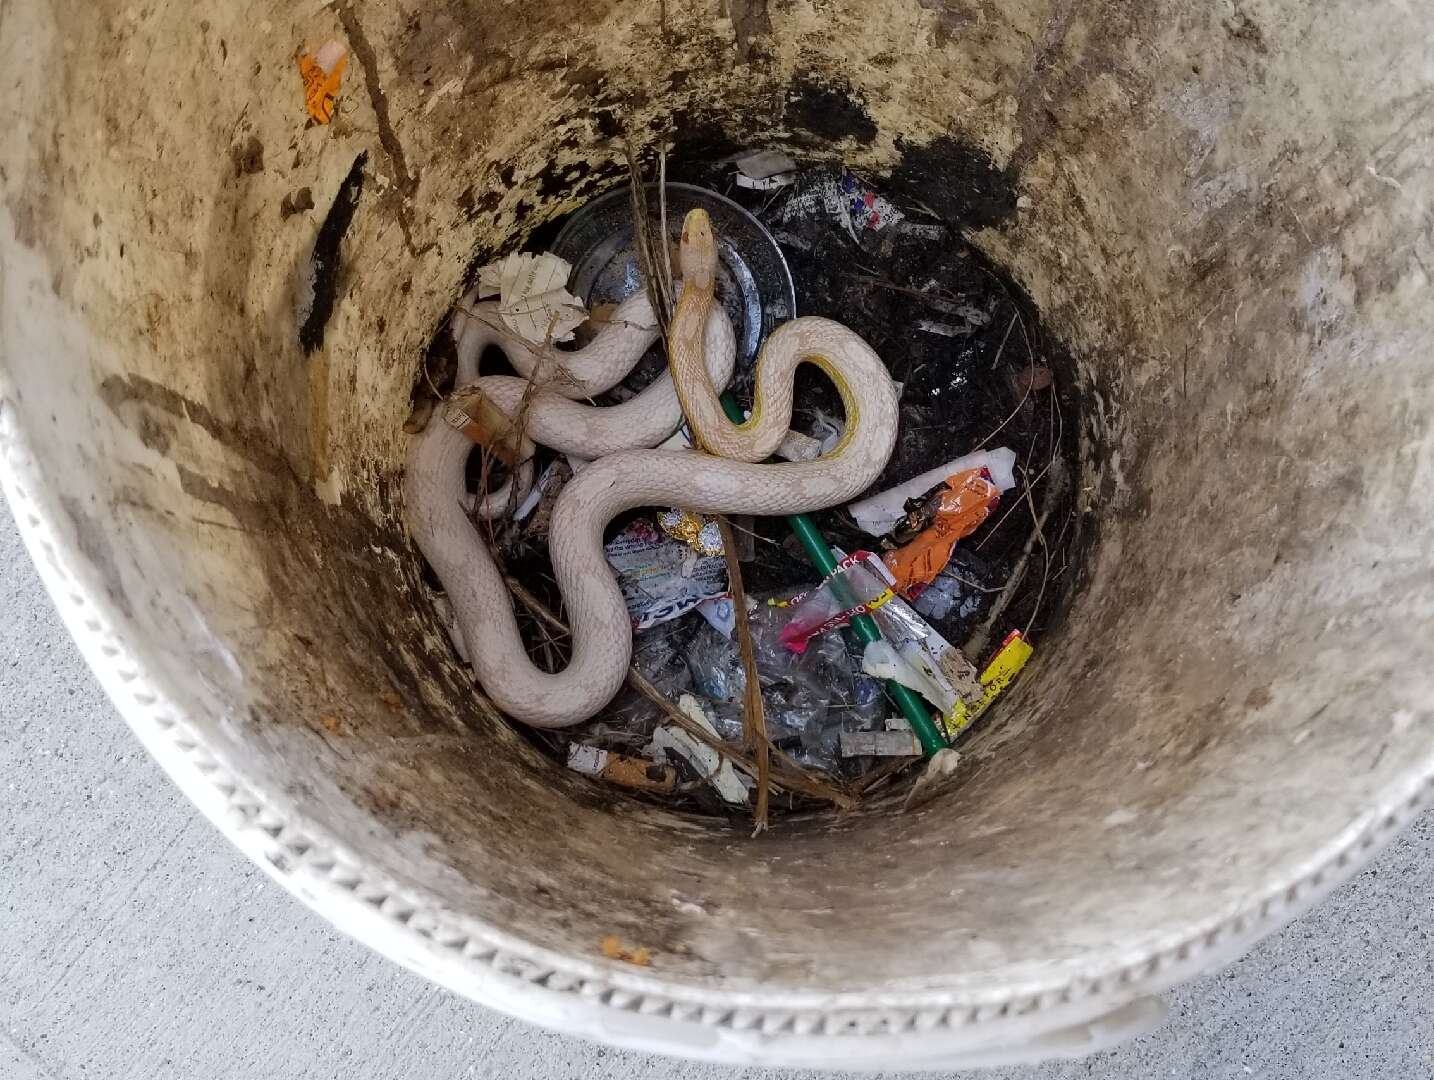 snake found in dumpster 